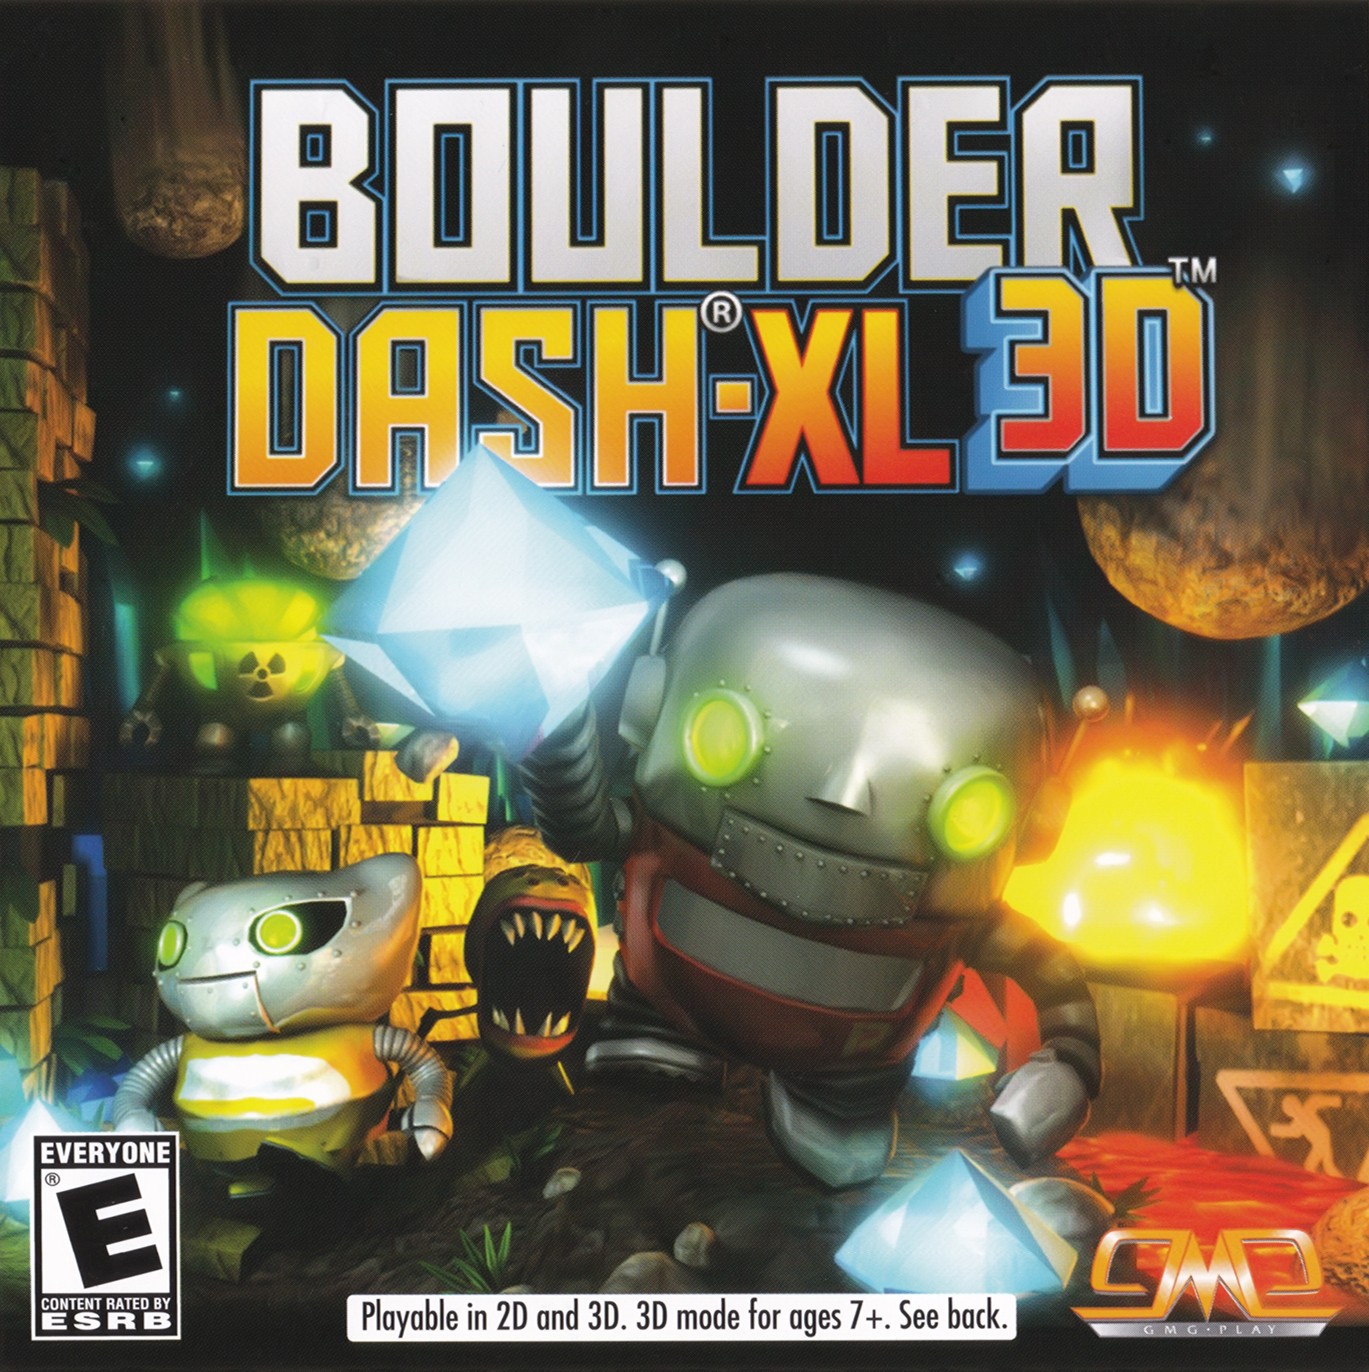 'Boulder Dash XL 3D'